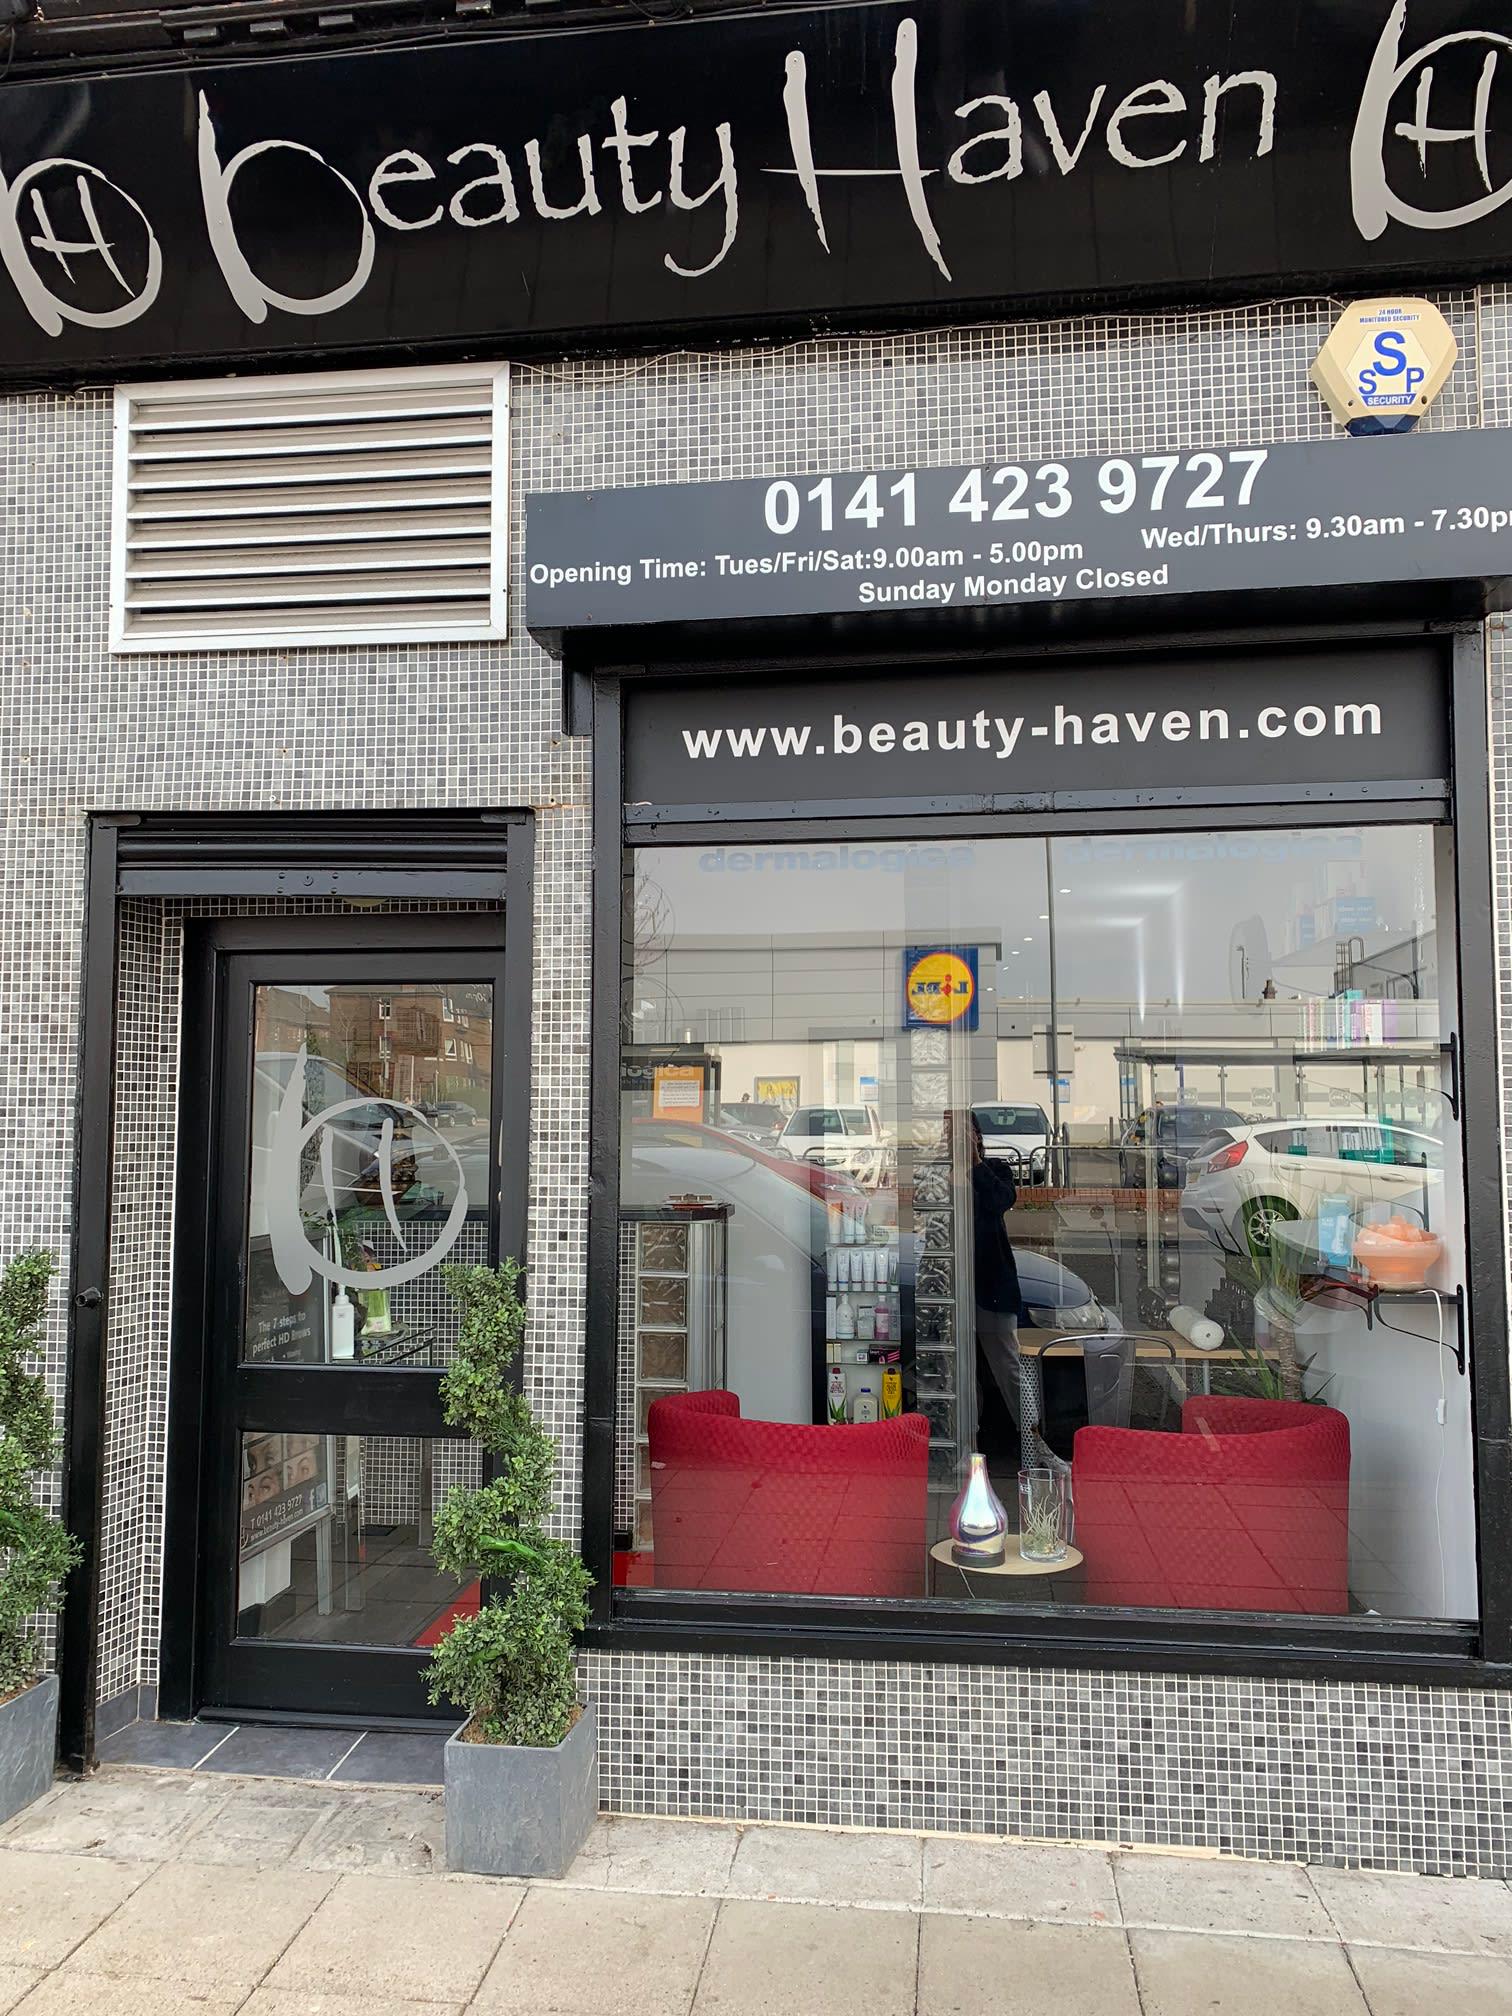 Beauty Haven Glasgow 01414 239727